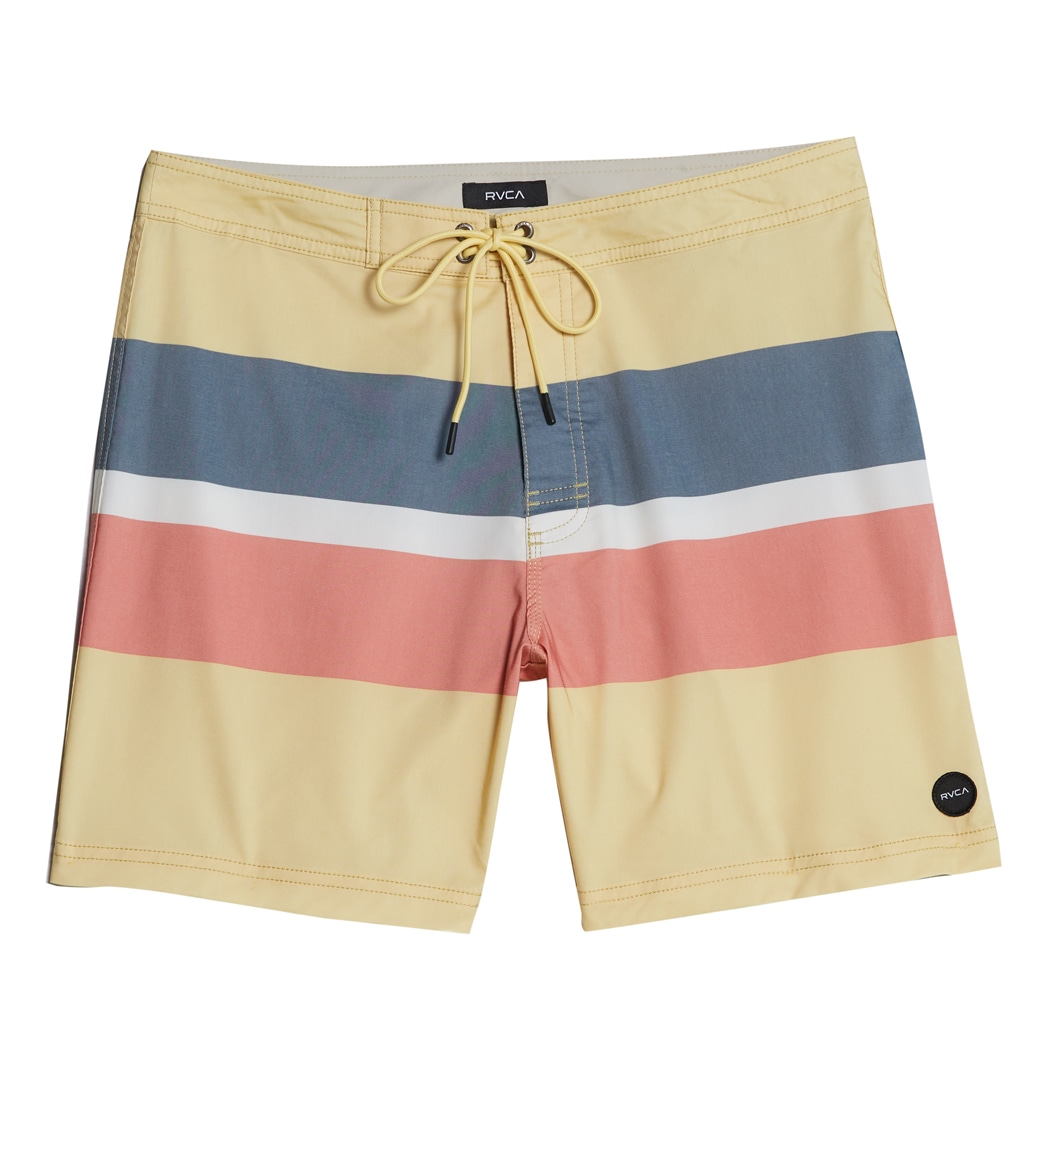 Rvca Men's Westport 17 Trunks Shorts - Vintage Gold 30 Cotton/Polyester - Swimoutlet.com